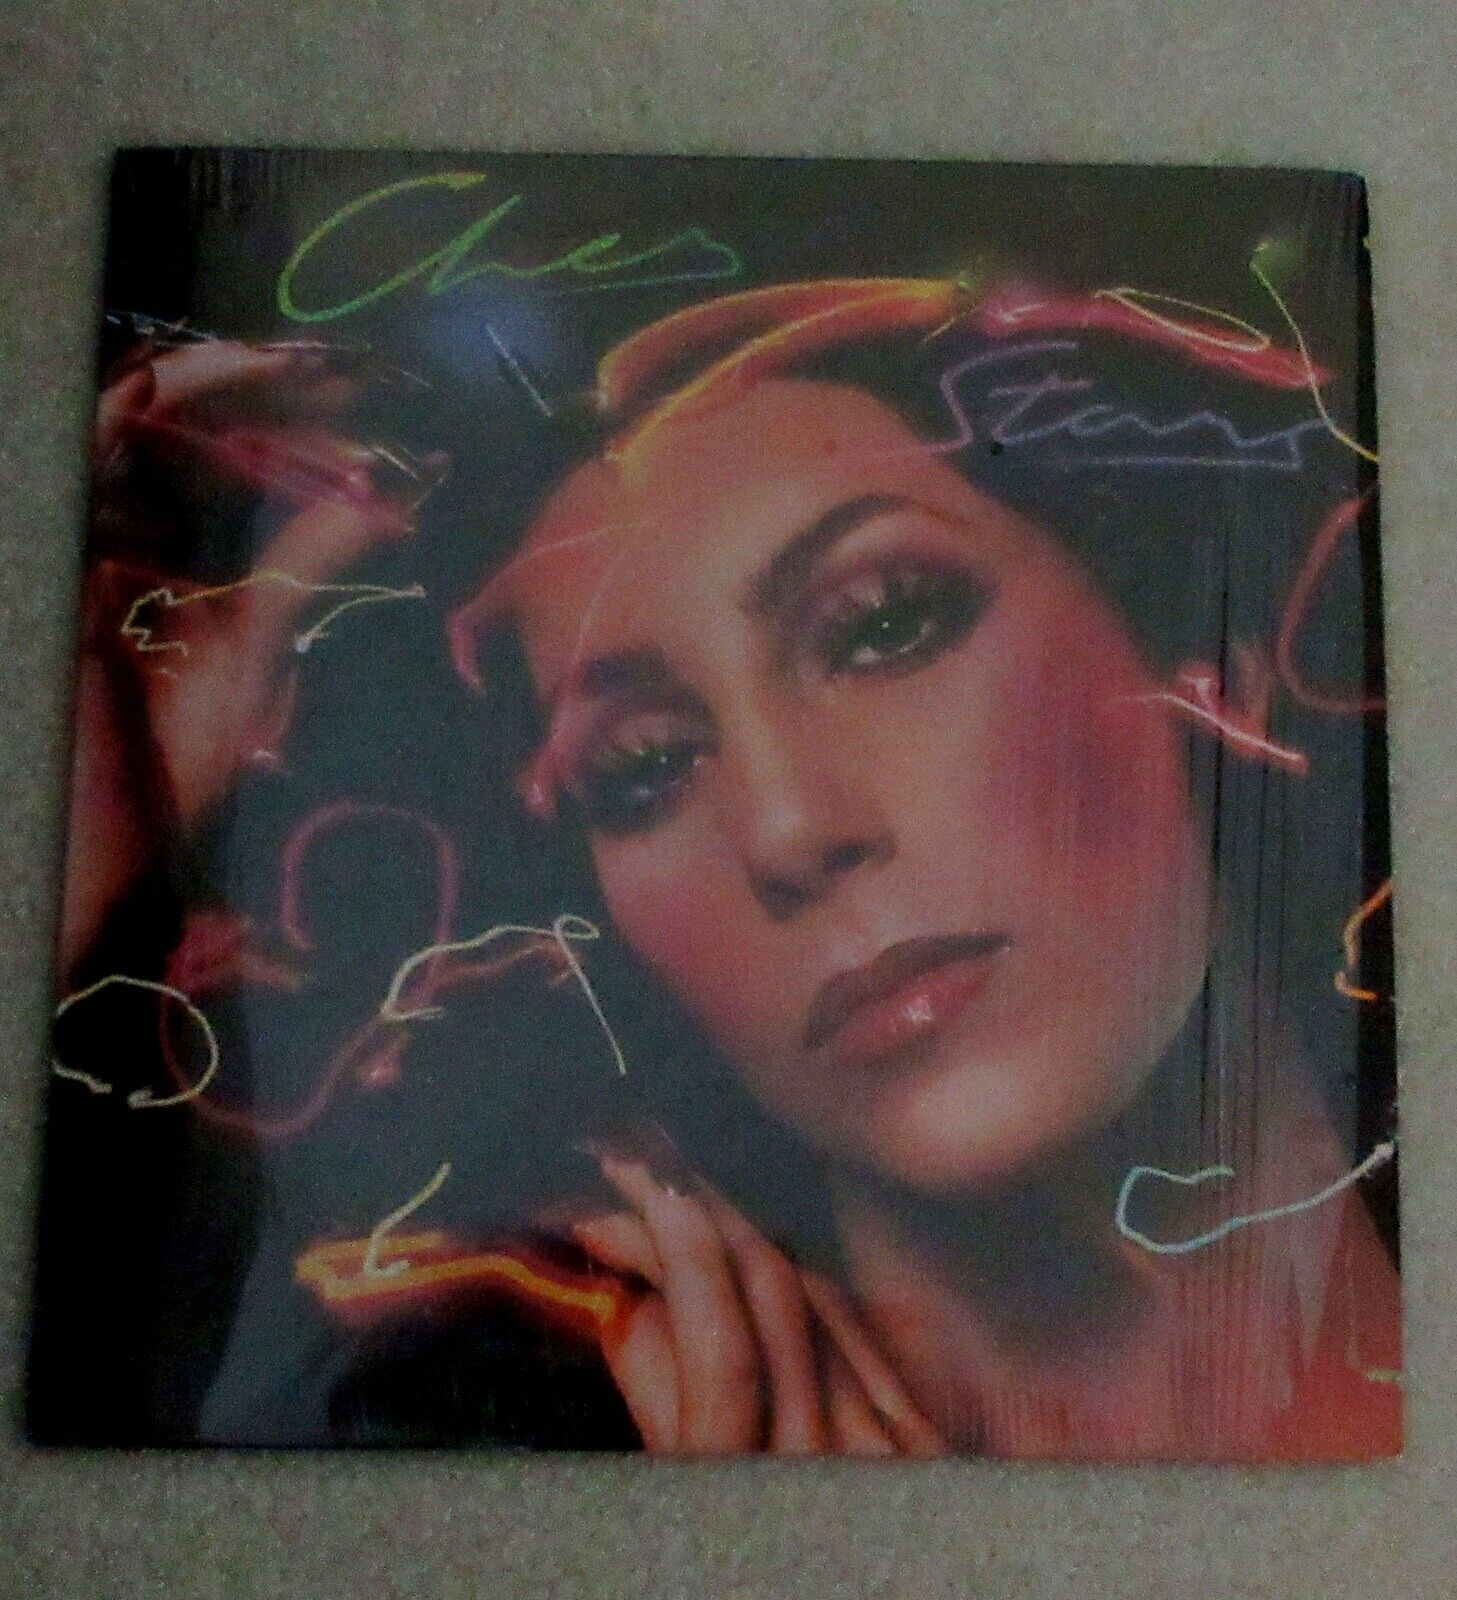 Cher - Stars 33 rpmVinyl LP - pre-owned